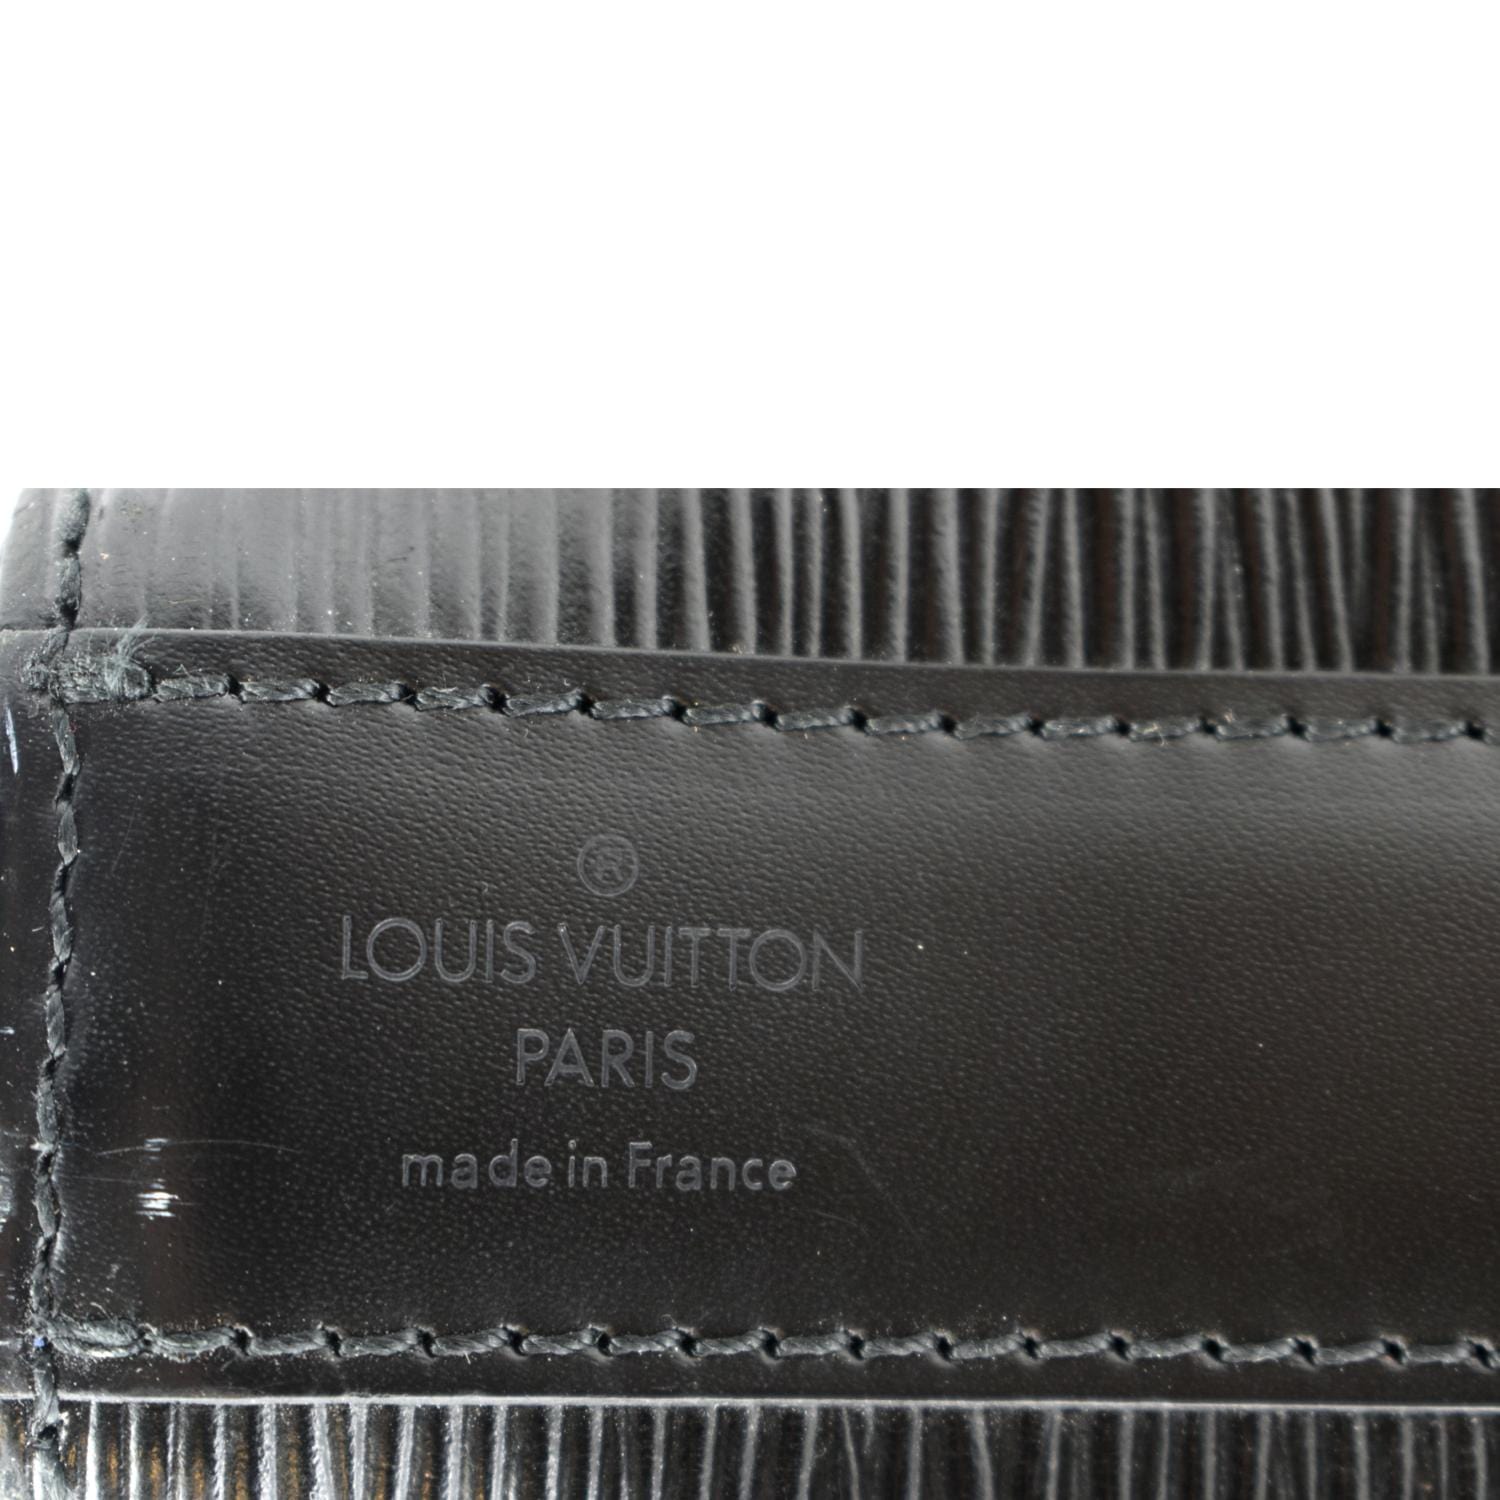 Louis Vuitton Sac D'epaule Twist Bucket Hobo With Pouch 871914 Red Epi  Shoulder Bag, Louis Vuitton